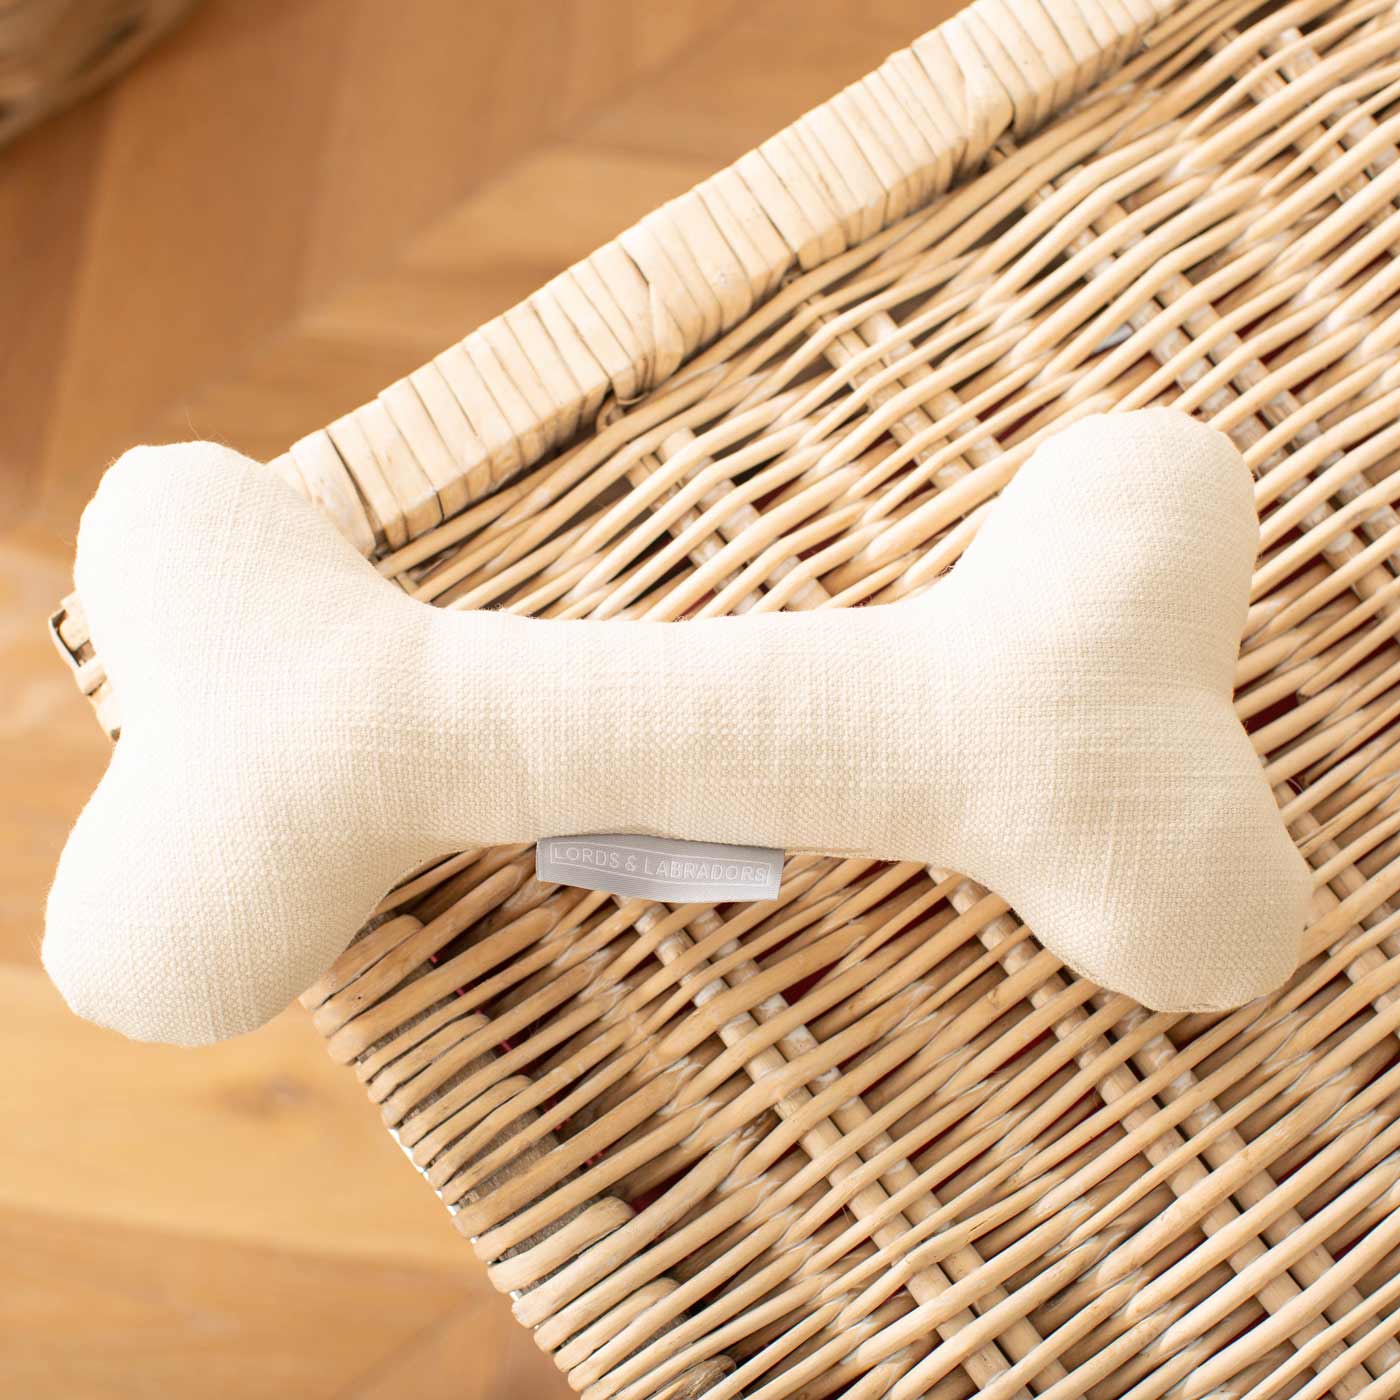 Savanna Bone Dog Toy By Lords & Labradors